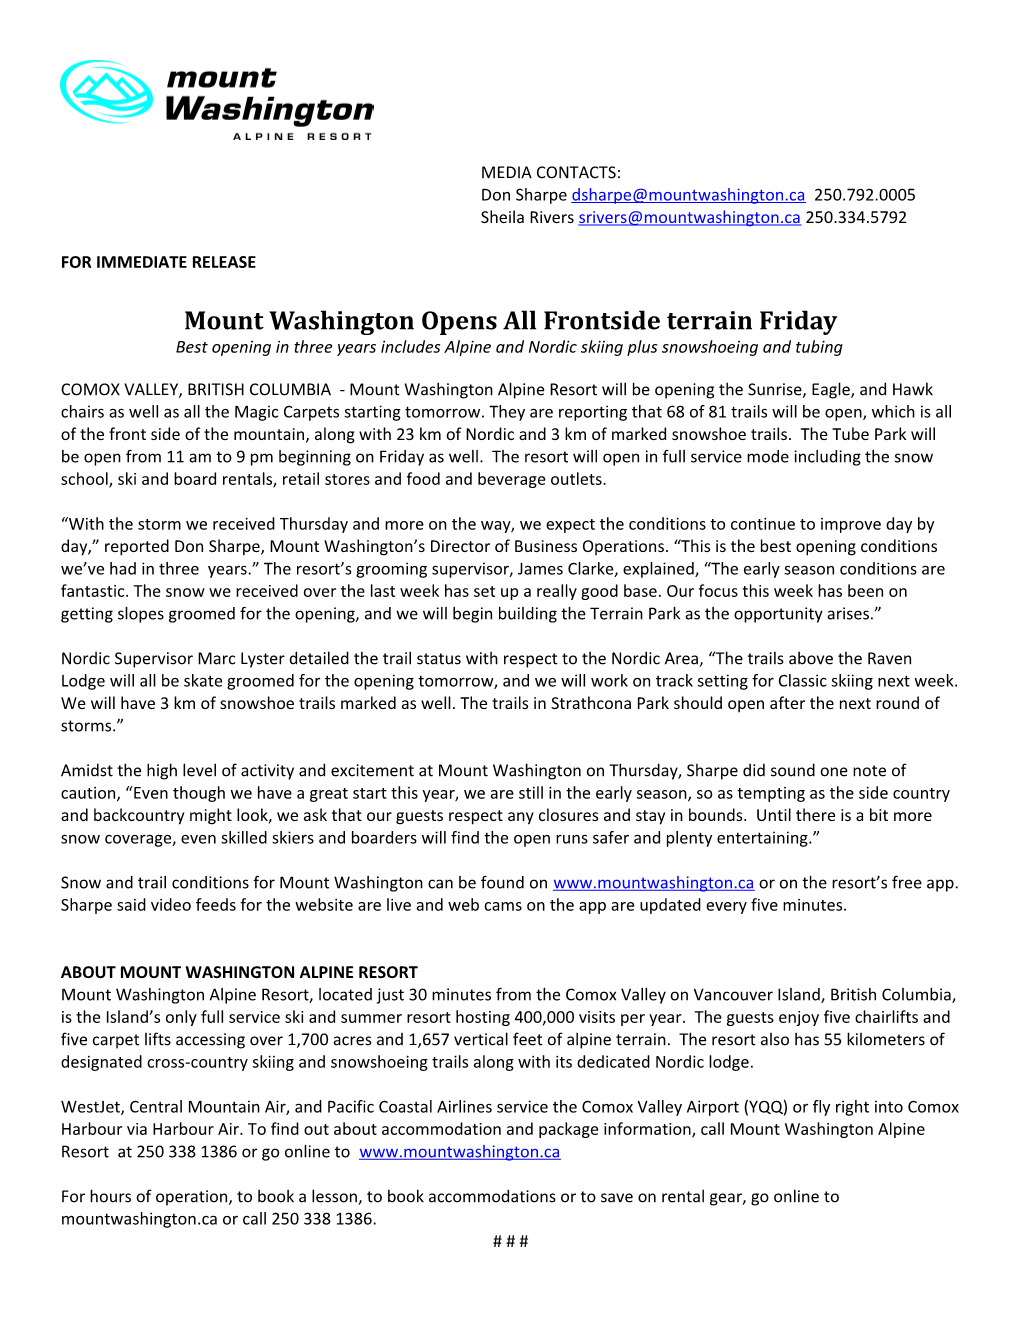 Mount Washington Opens All Frontside Terrain Friday